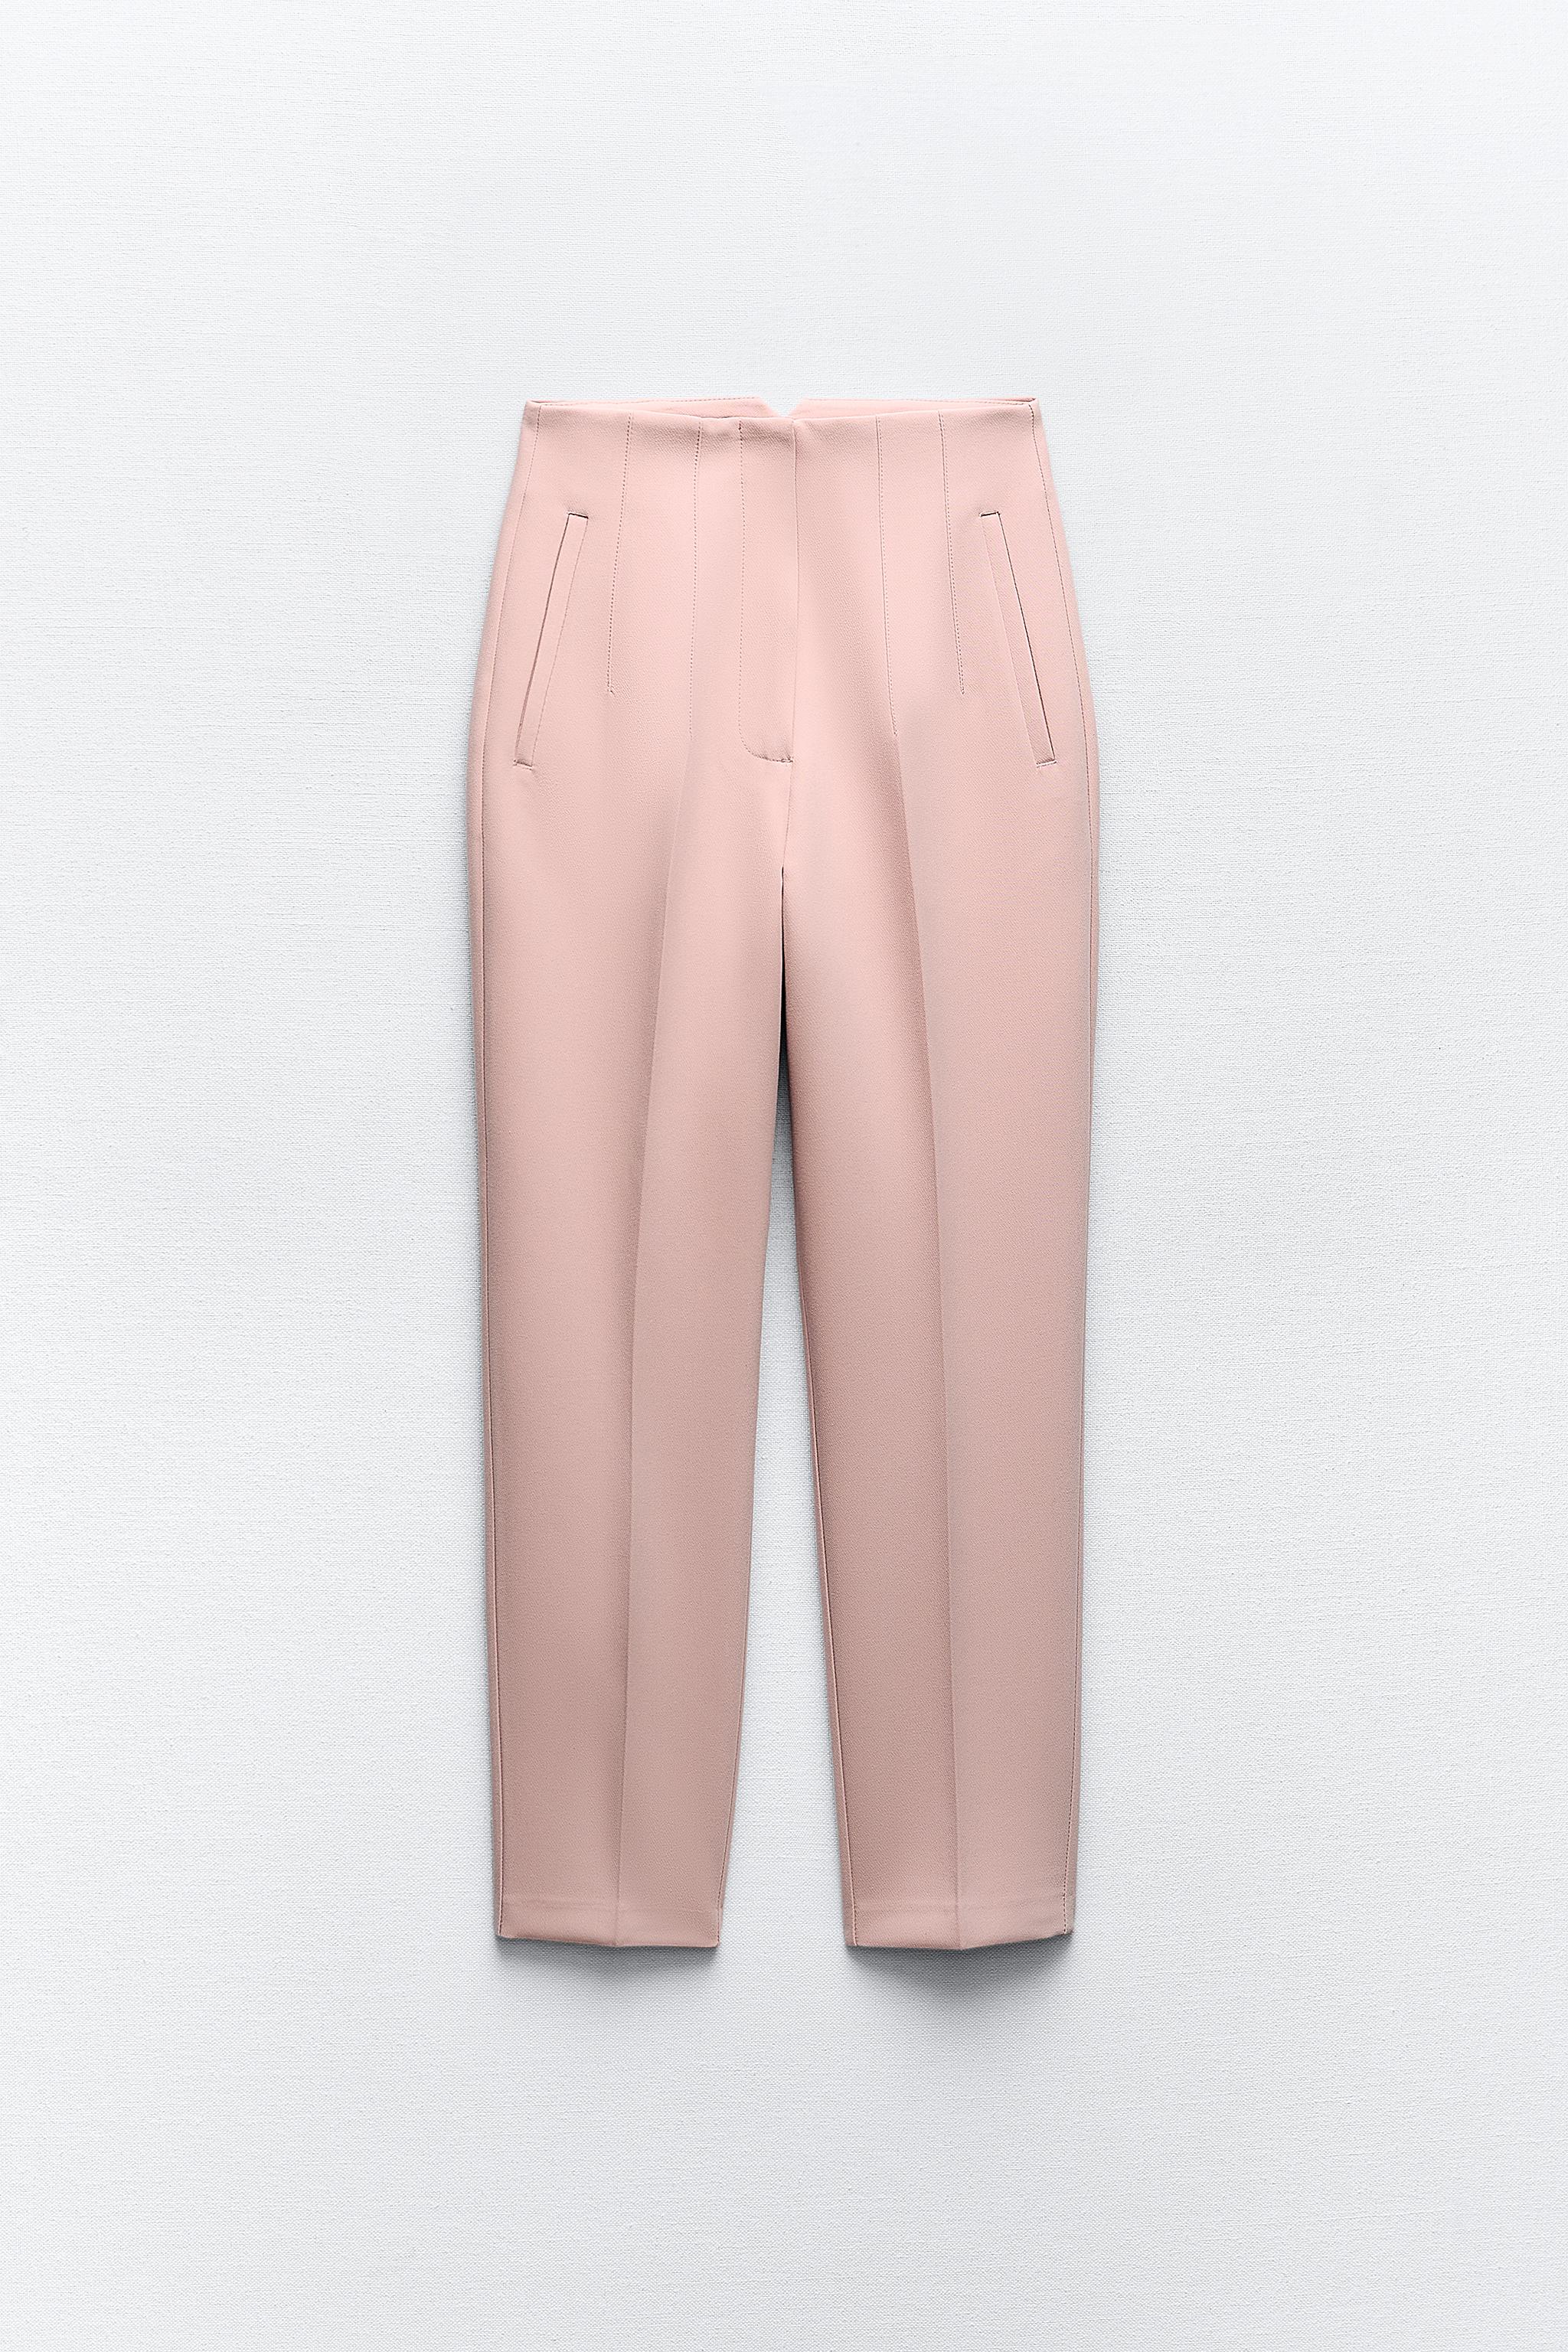 Zara high waist trousers